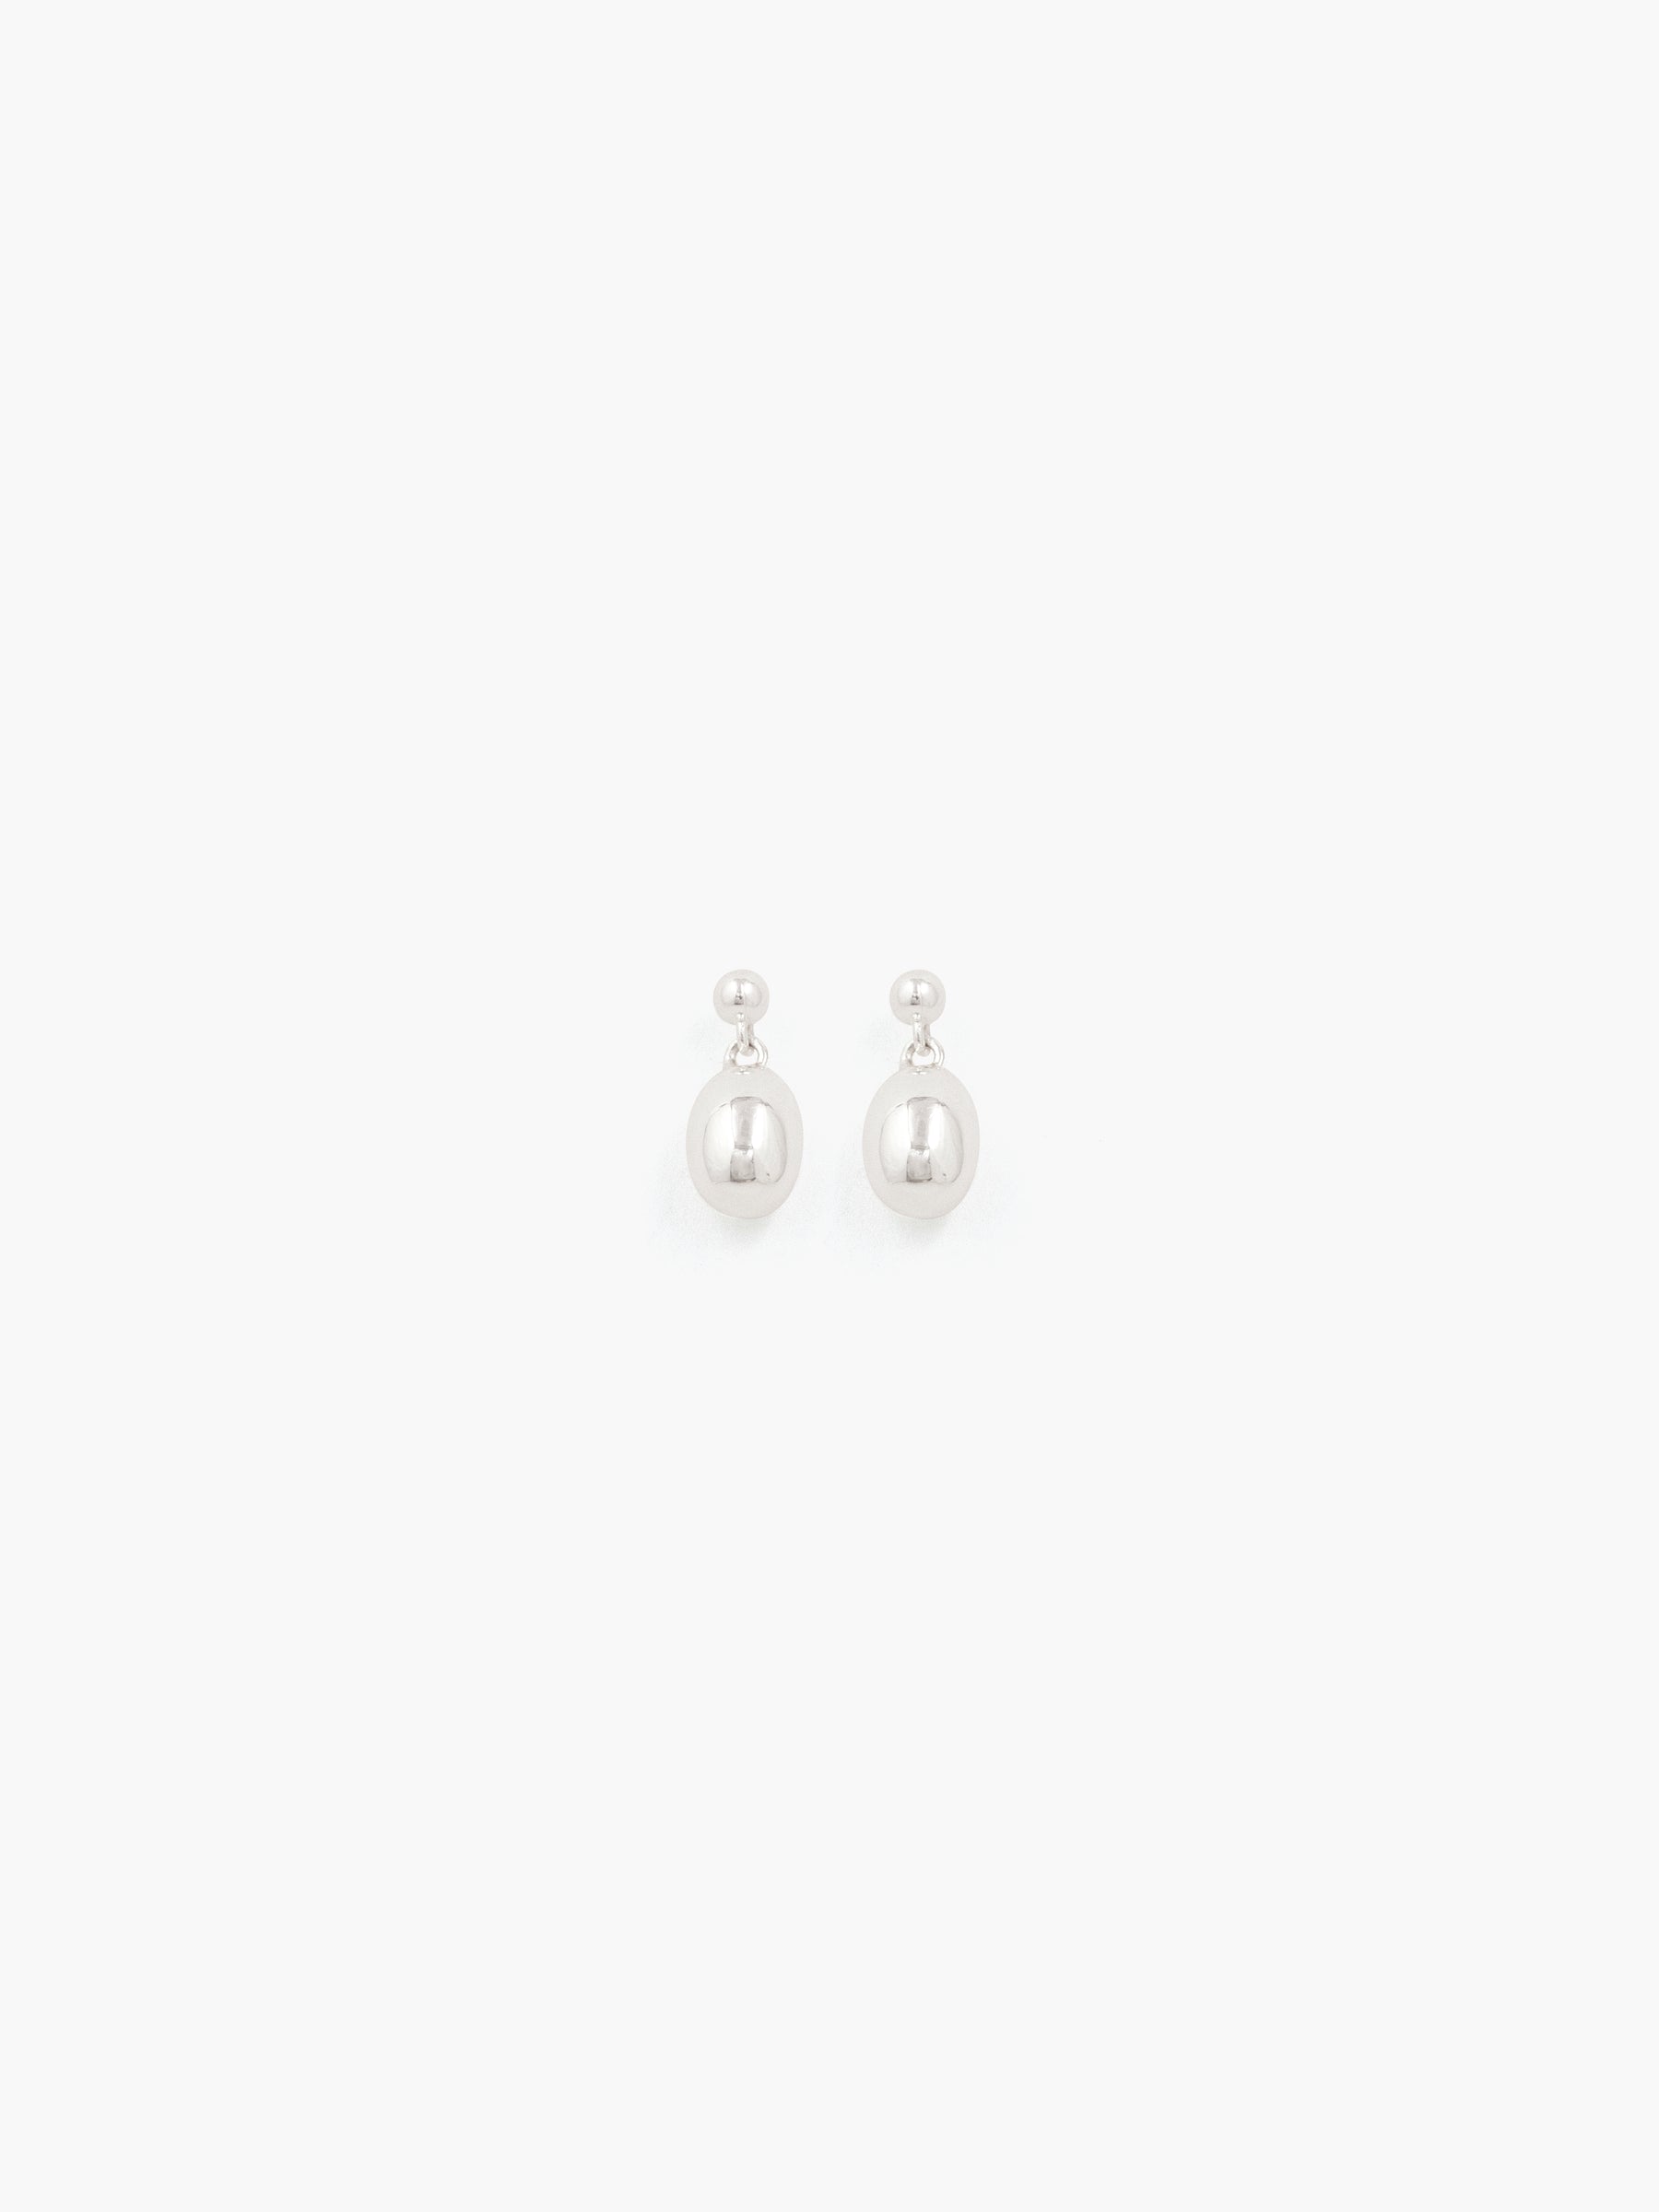 Reflection Mini Earrings - SILVER / RAGBAG (リフレクションミニイヤリング・ピアス - シルバー / RAGBAG) - ICHI GALLERY  | ジュエリー ブランド デンマーク 女性  小物 アクセサリー ギフト 贈り物 プレゼント